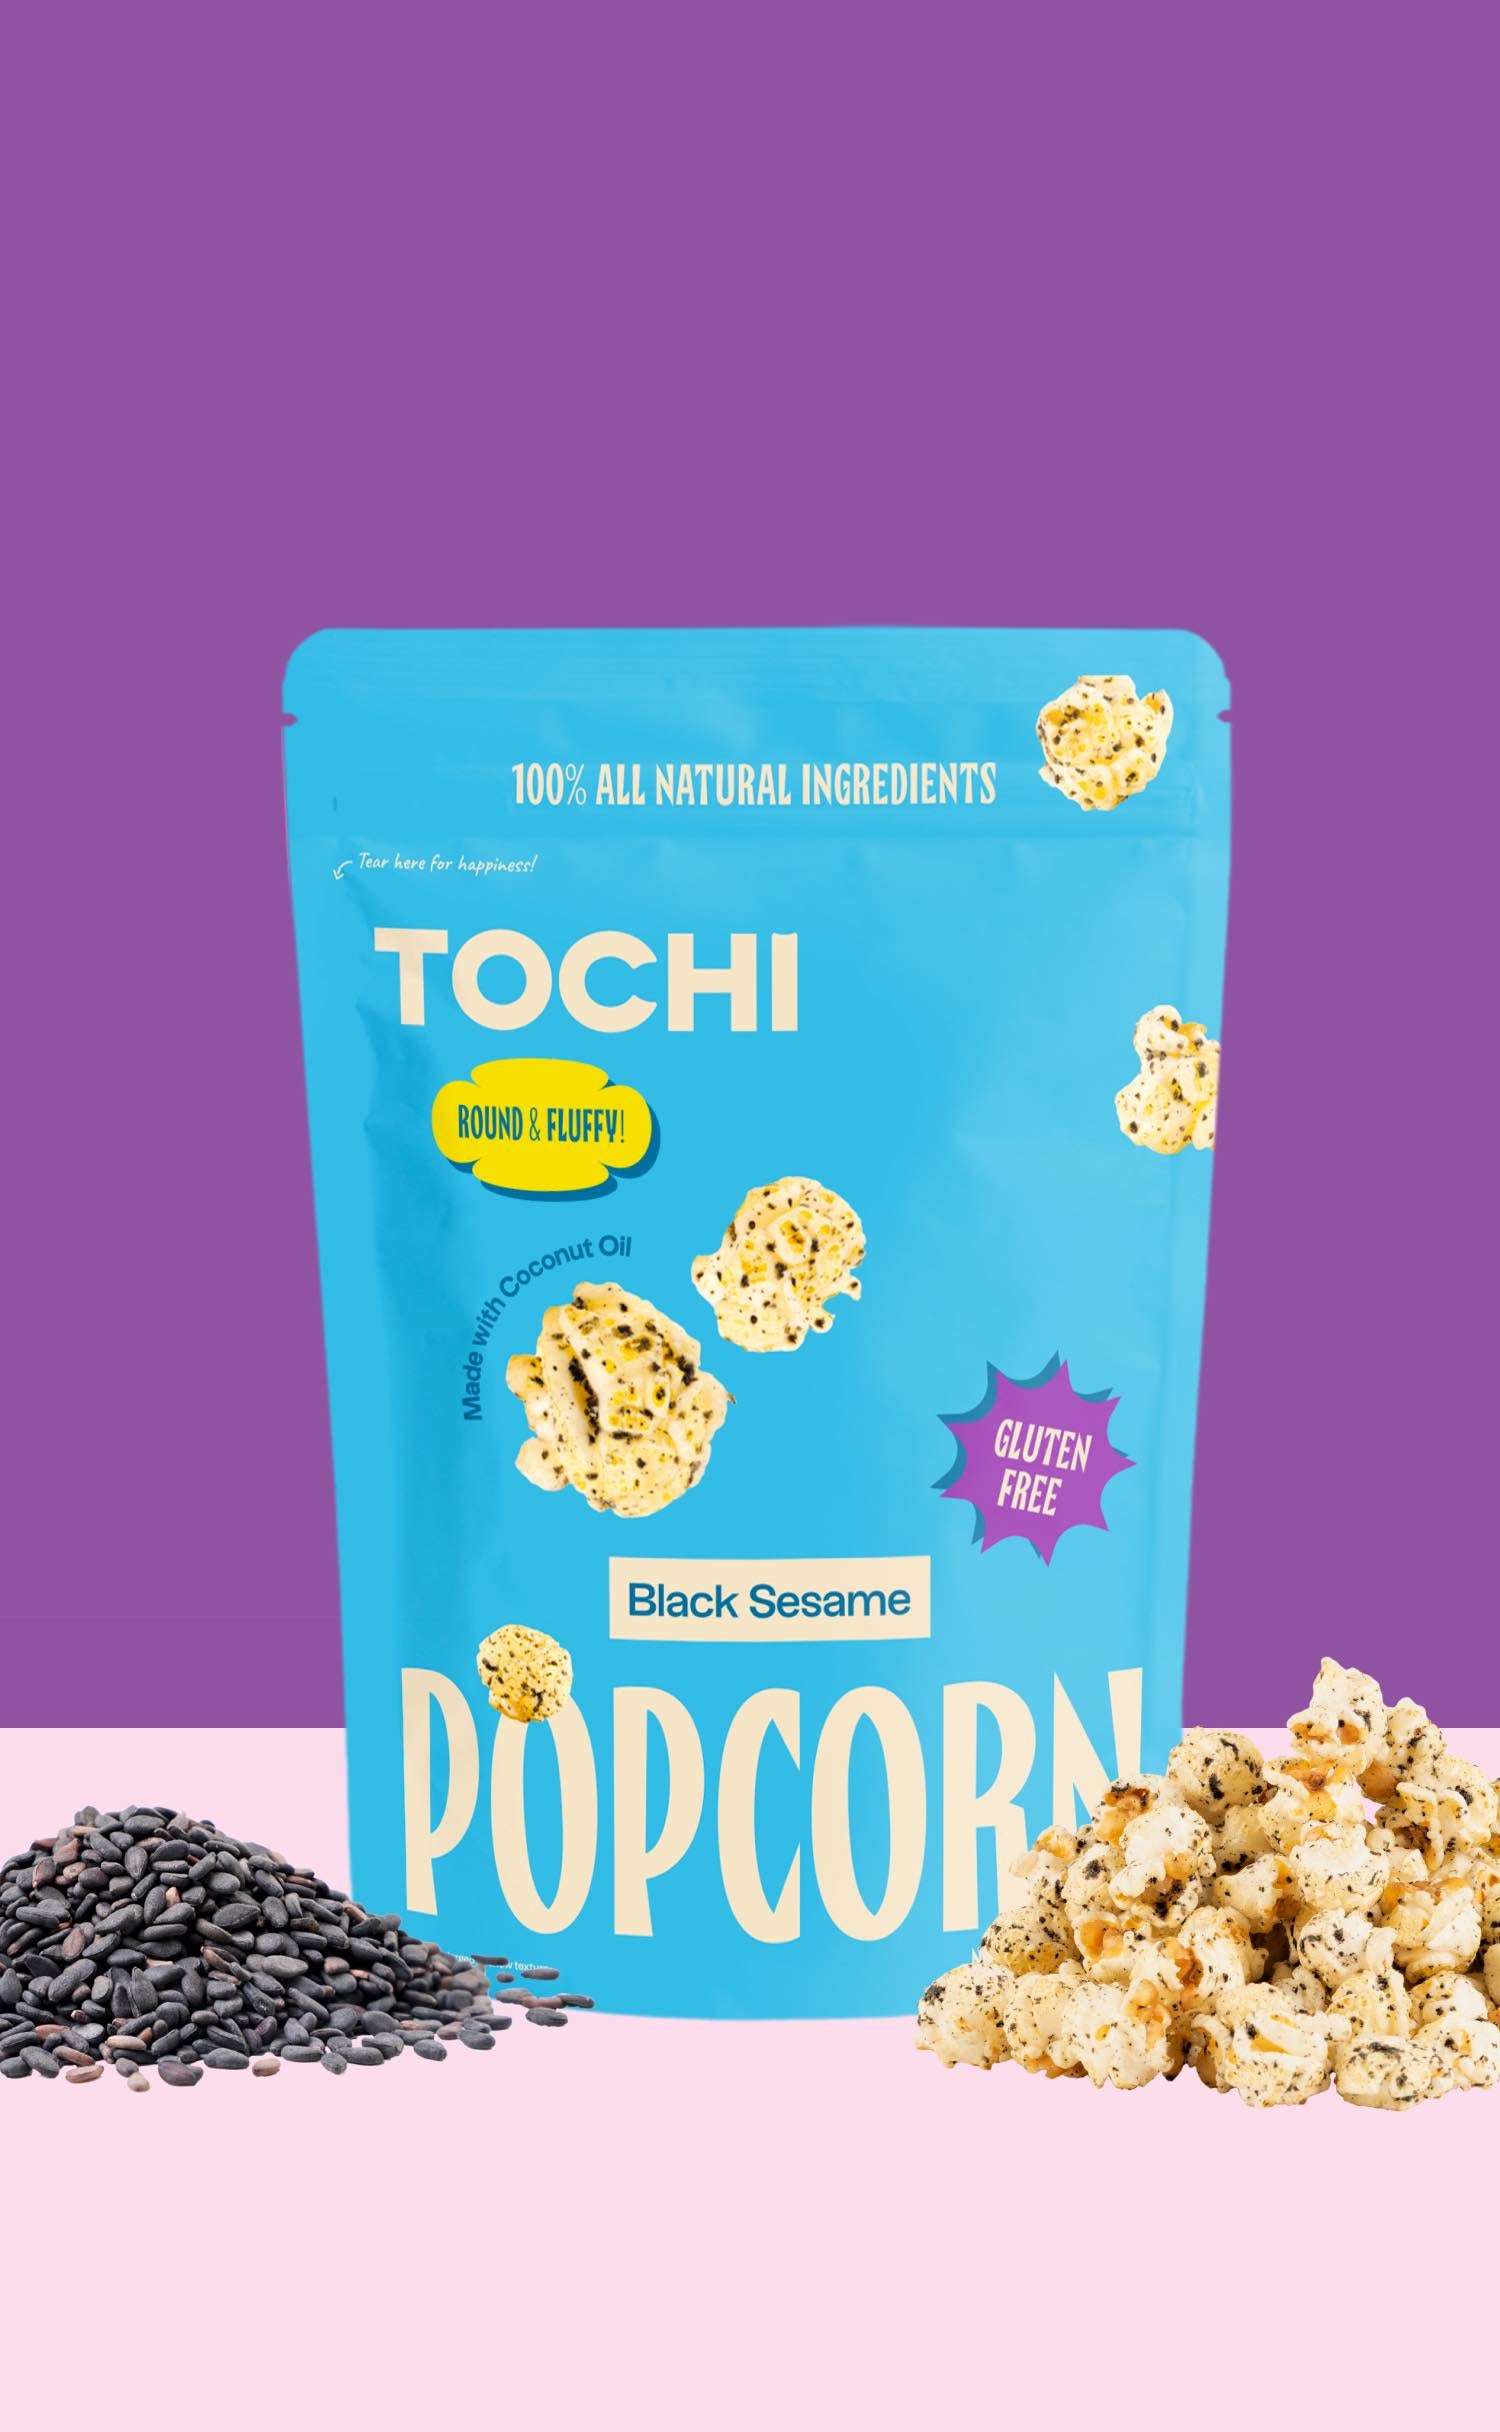 Tochi Black Sesame gourmet popcorn